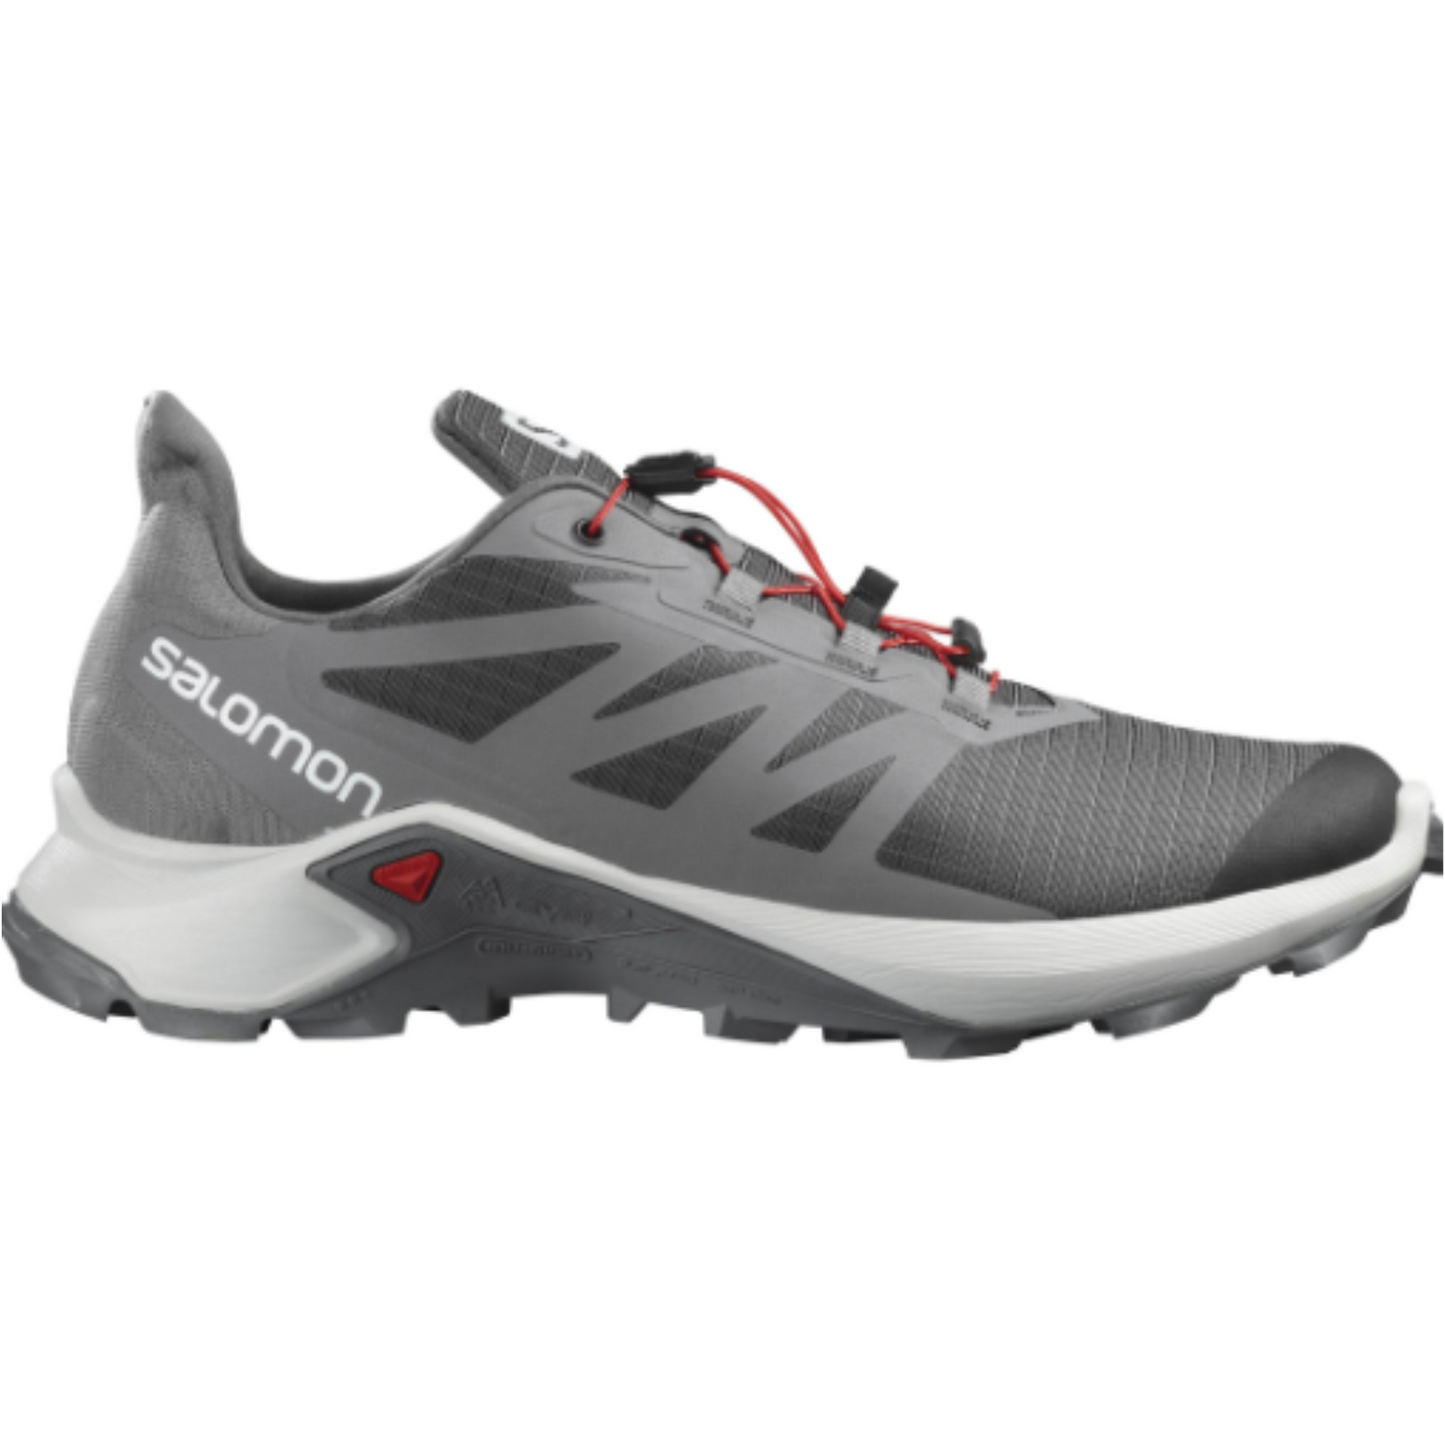 Men's Salomon Supercross 3 Trail running shoes in grey